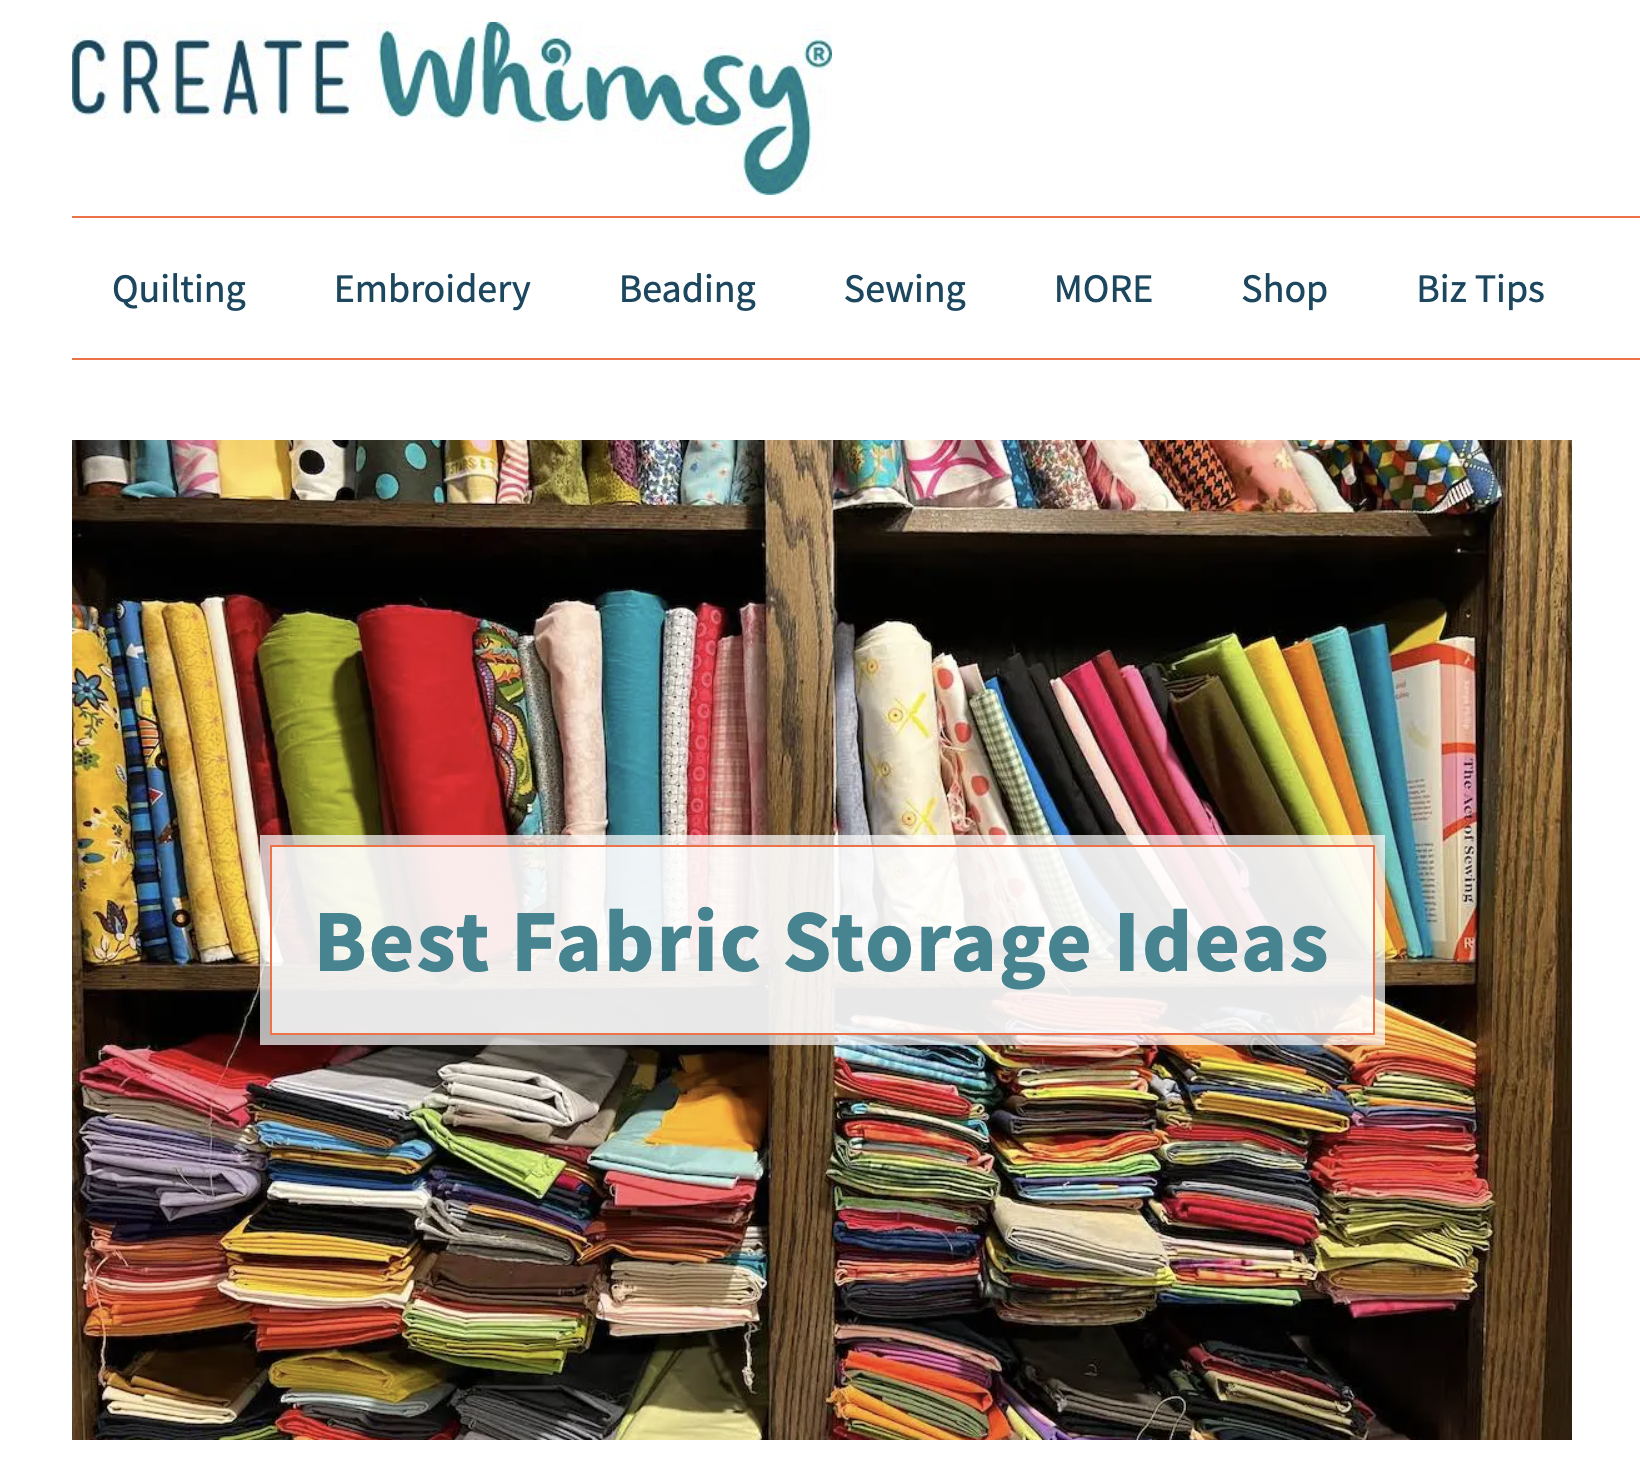 Fabric Storage and Fabric Organization Ideas